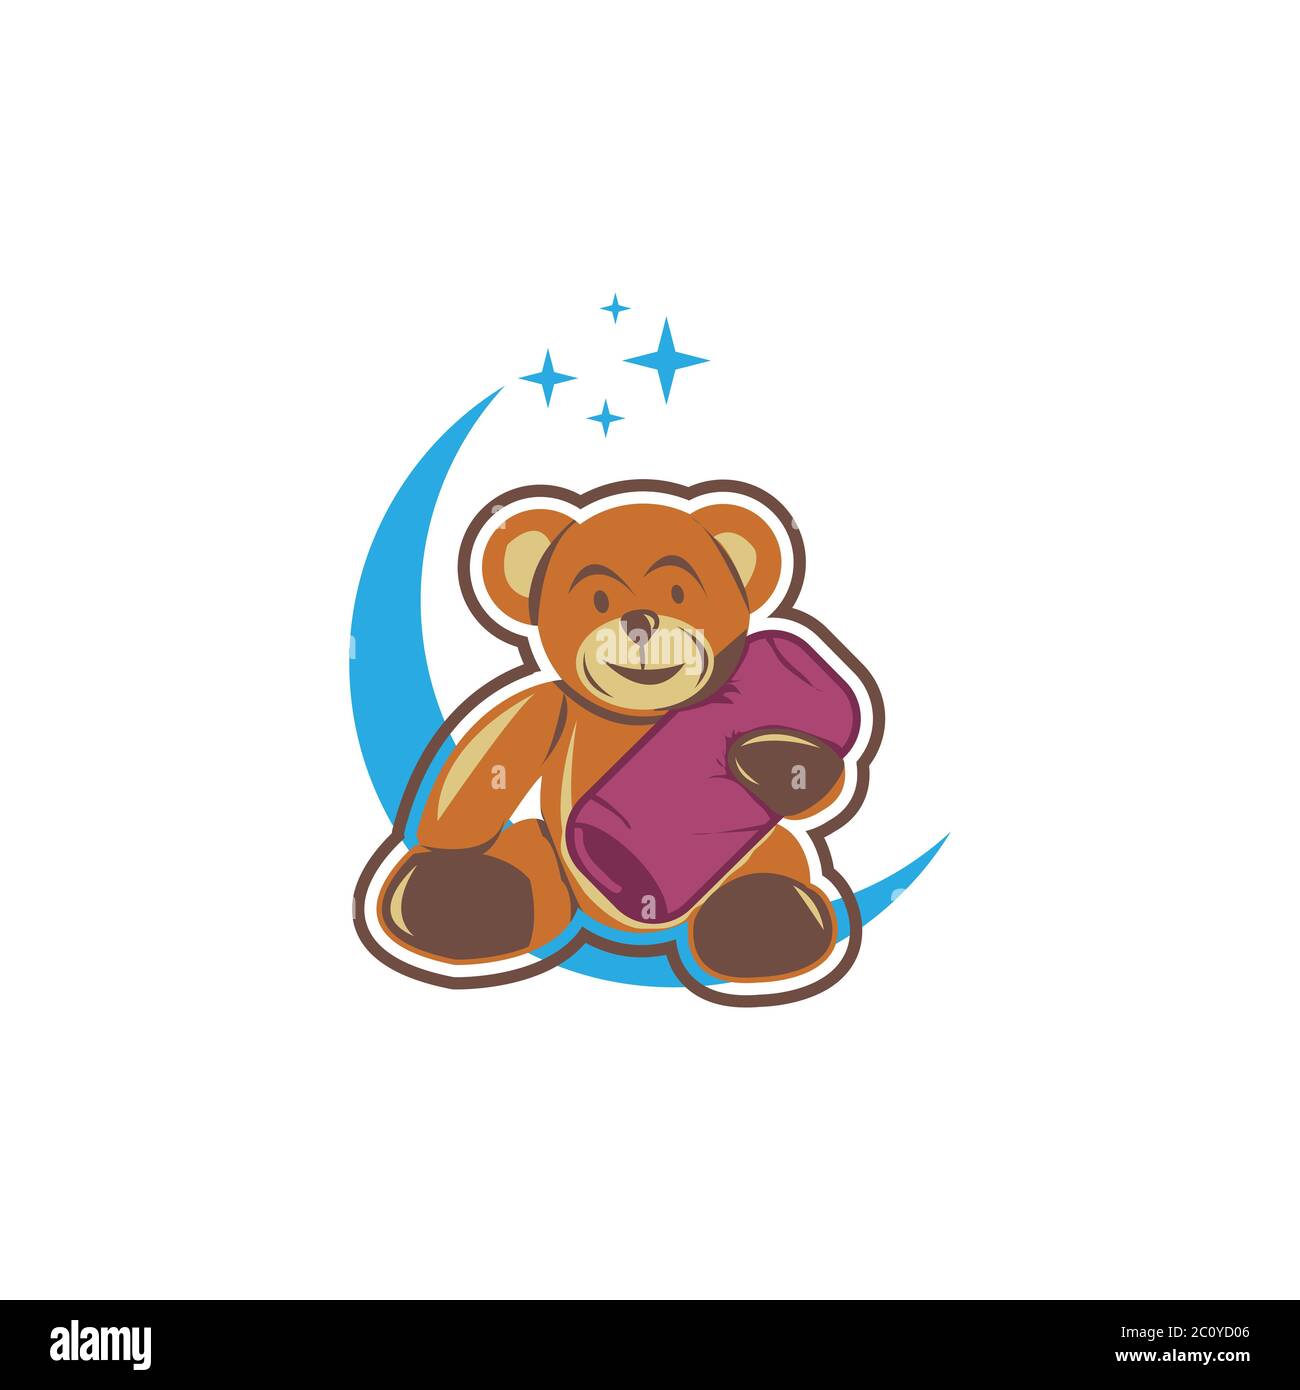 Cute teddy bear with bolster illustration free vector.EPS 10 Stock Vector